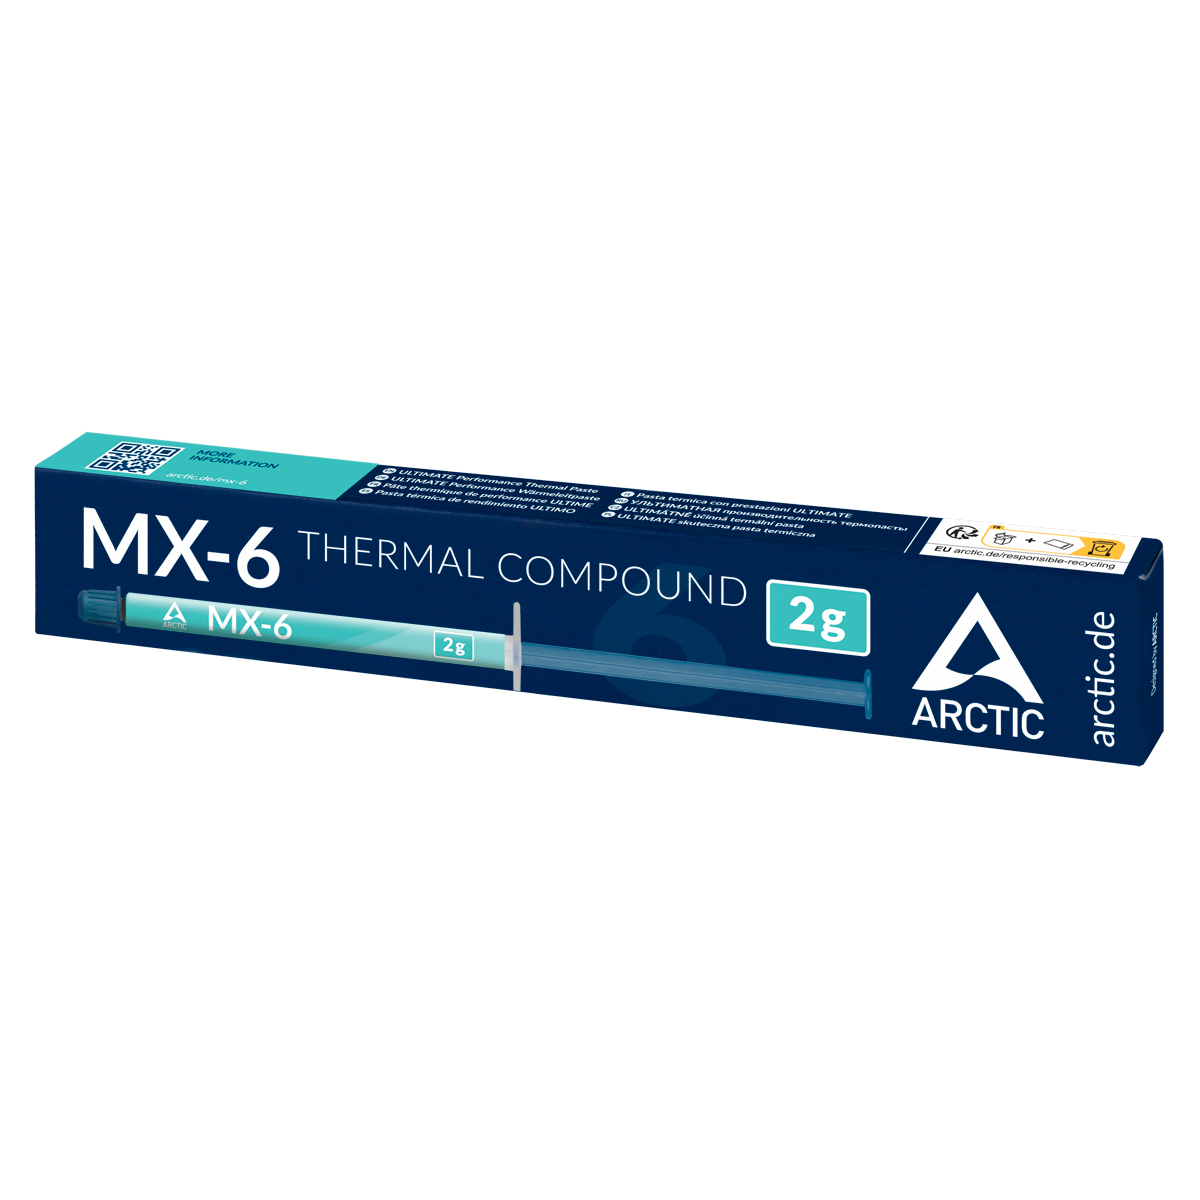 Arctic MX-6 (4g), 9,95 €